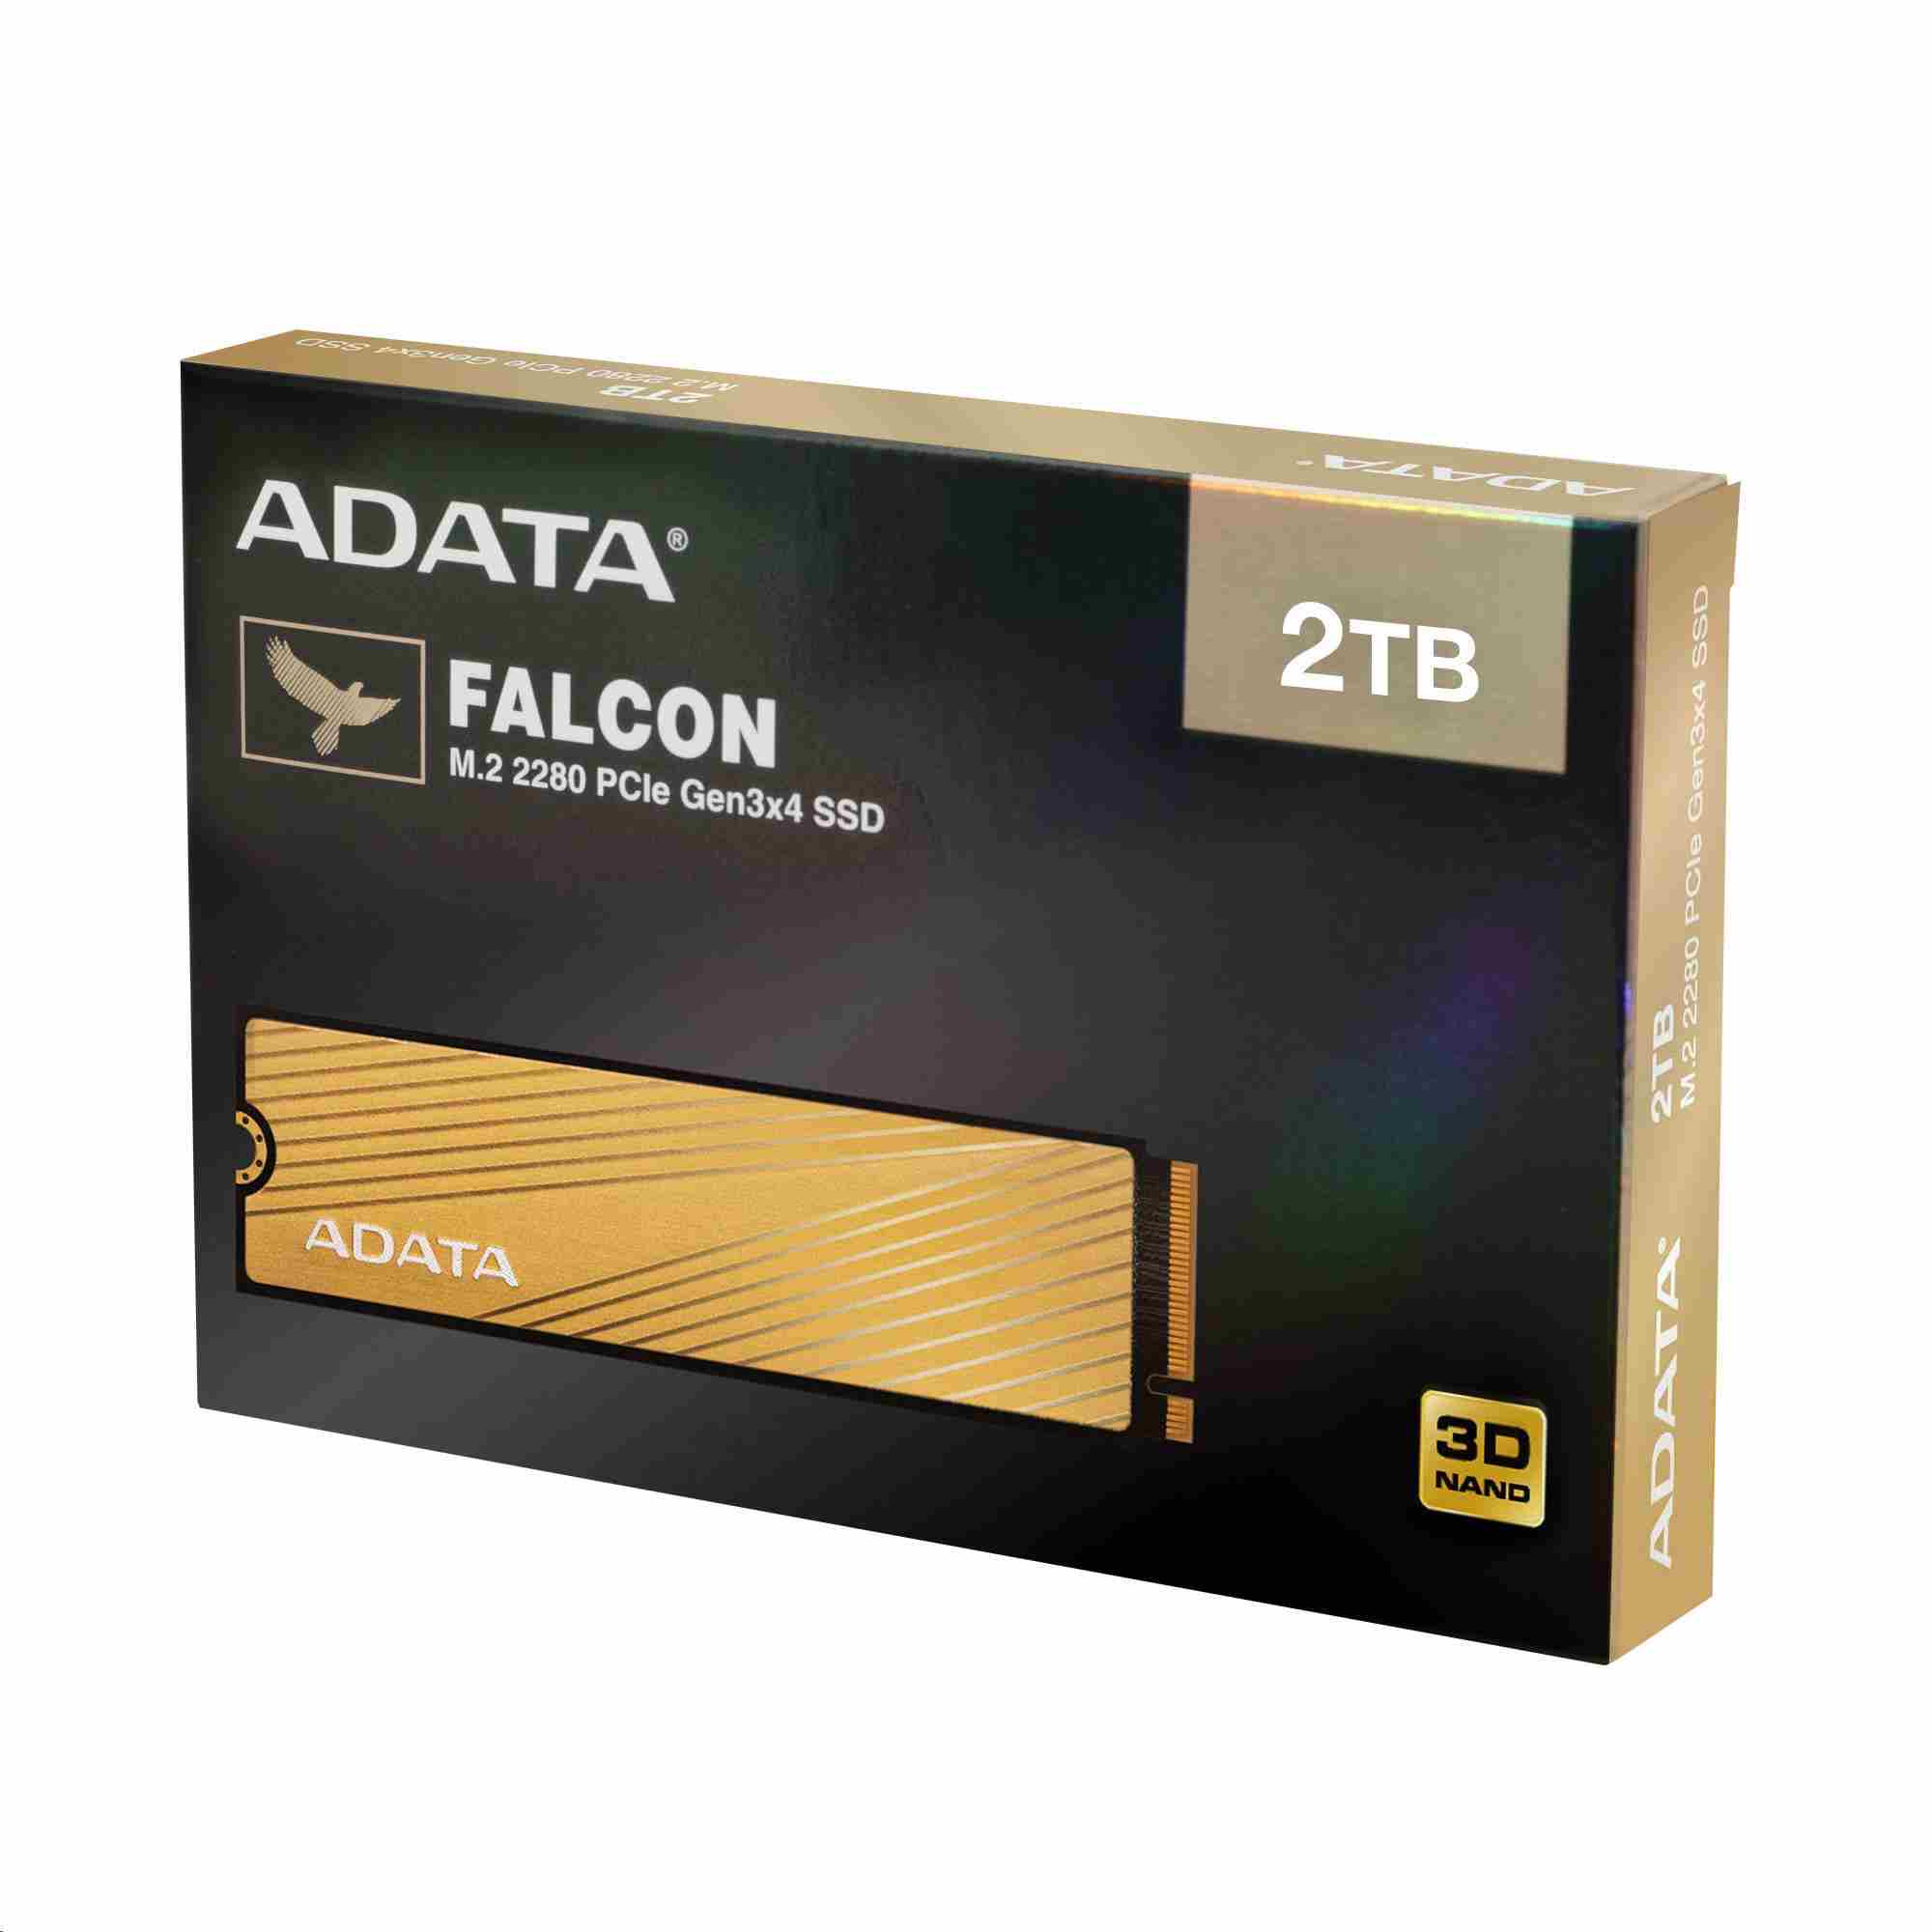 ADATA SSD 512GB FALCON PCIe Gen3x4 M.2 2280 (R:3100/  W:1500MB/ s)5 